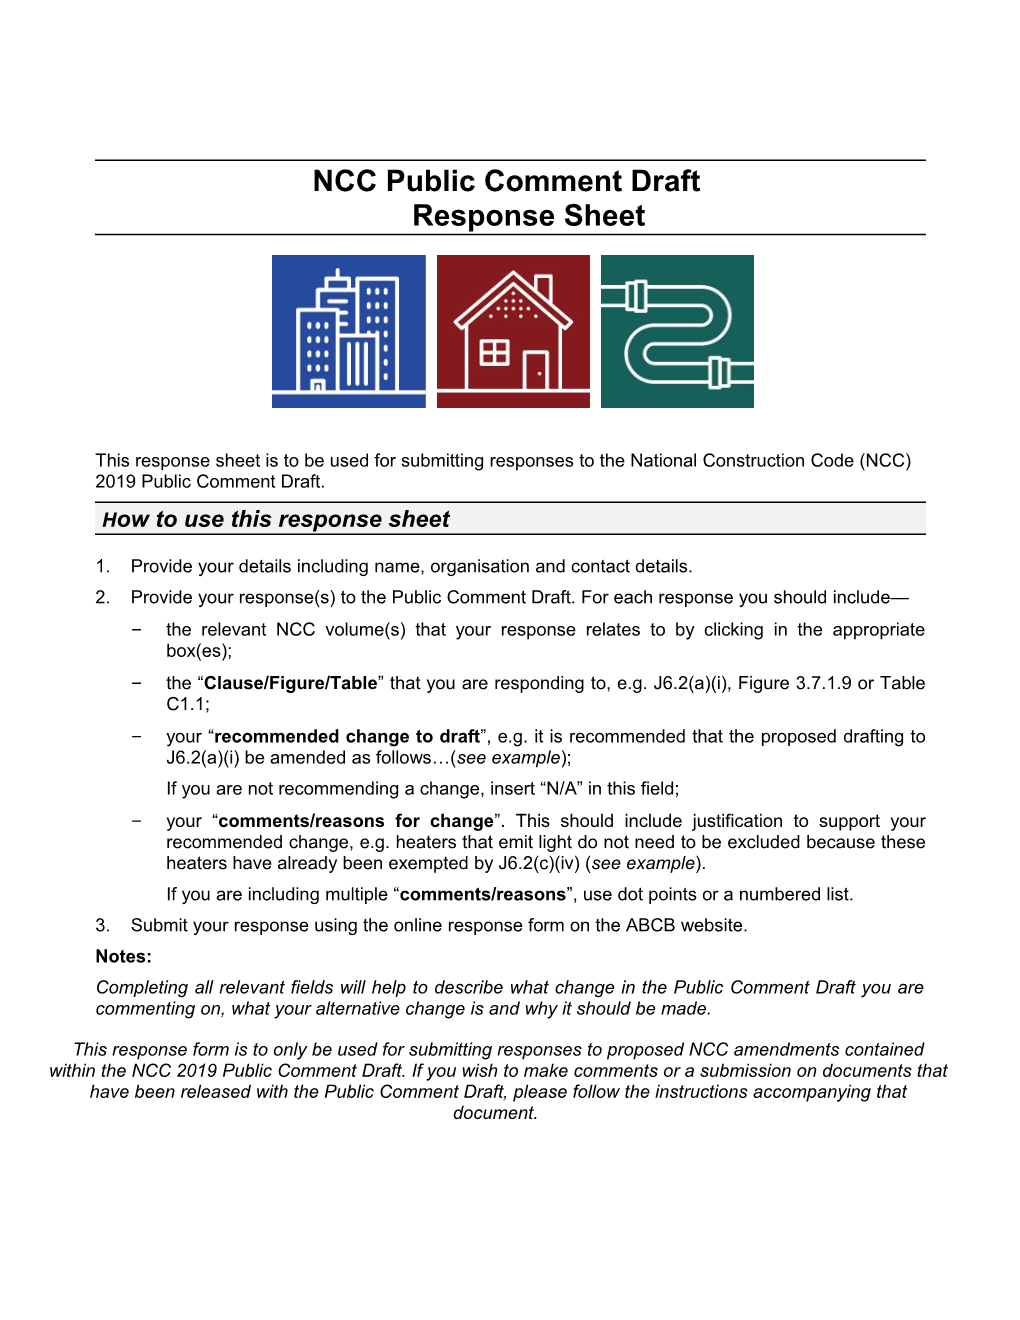 NCC Public Comment Draft Responsesheet